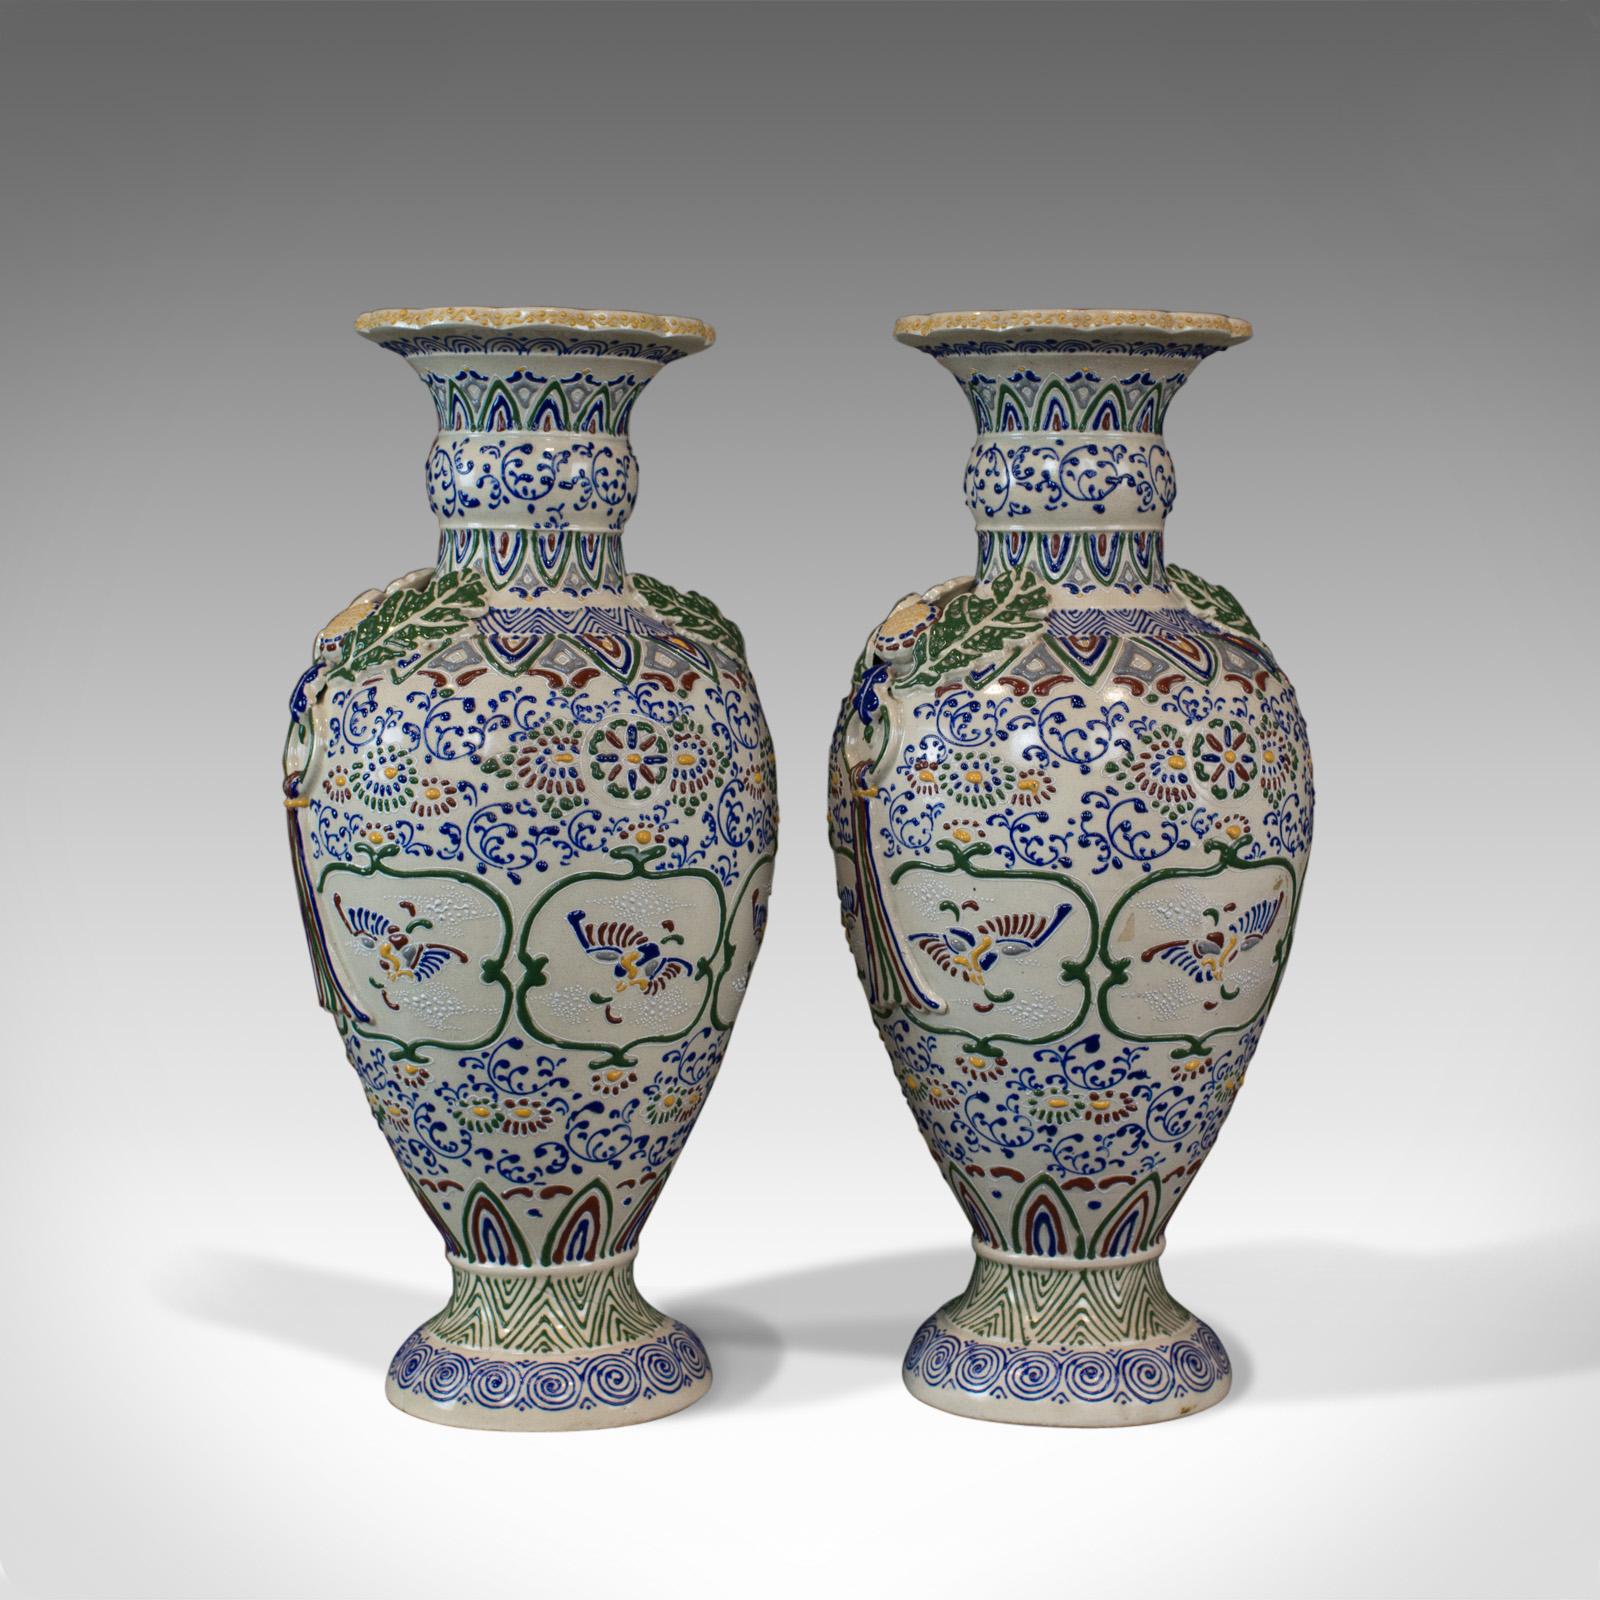 High Victorian Pair of Large Vintage Baluster Vases, Decorative Ceramic Urns, 20th Century